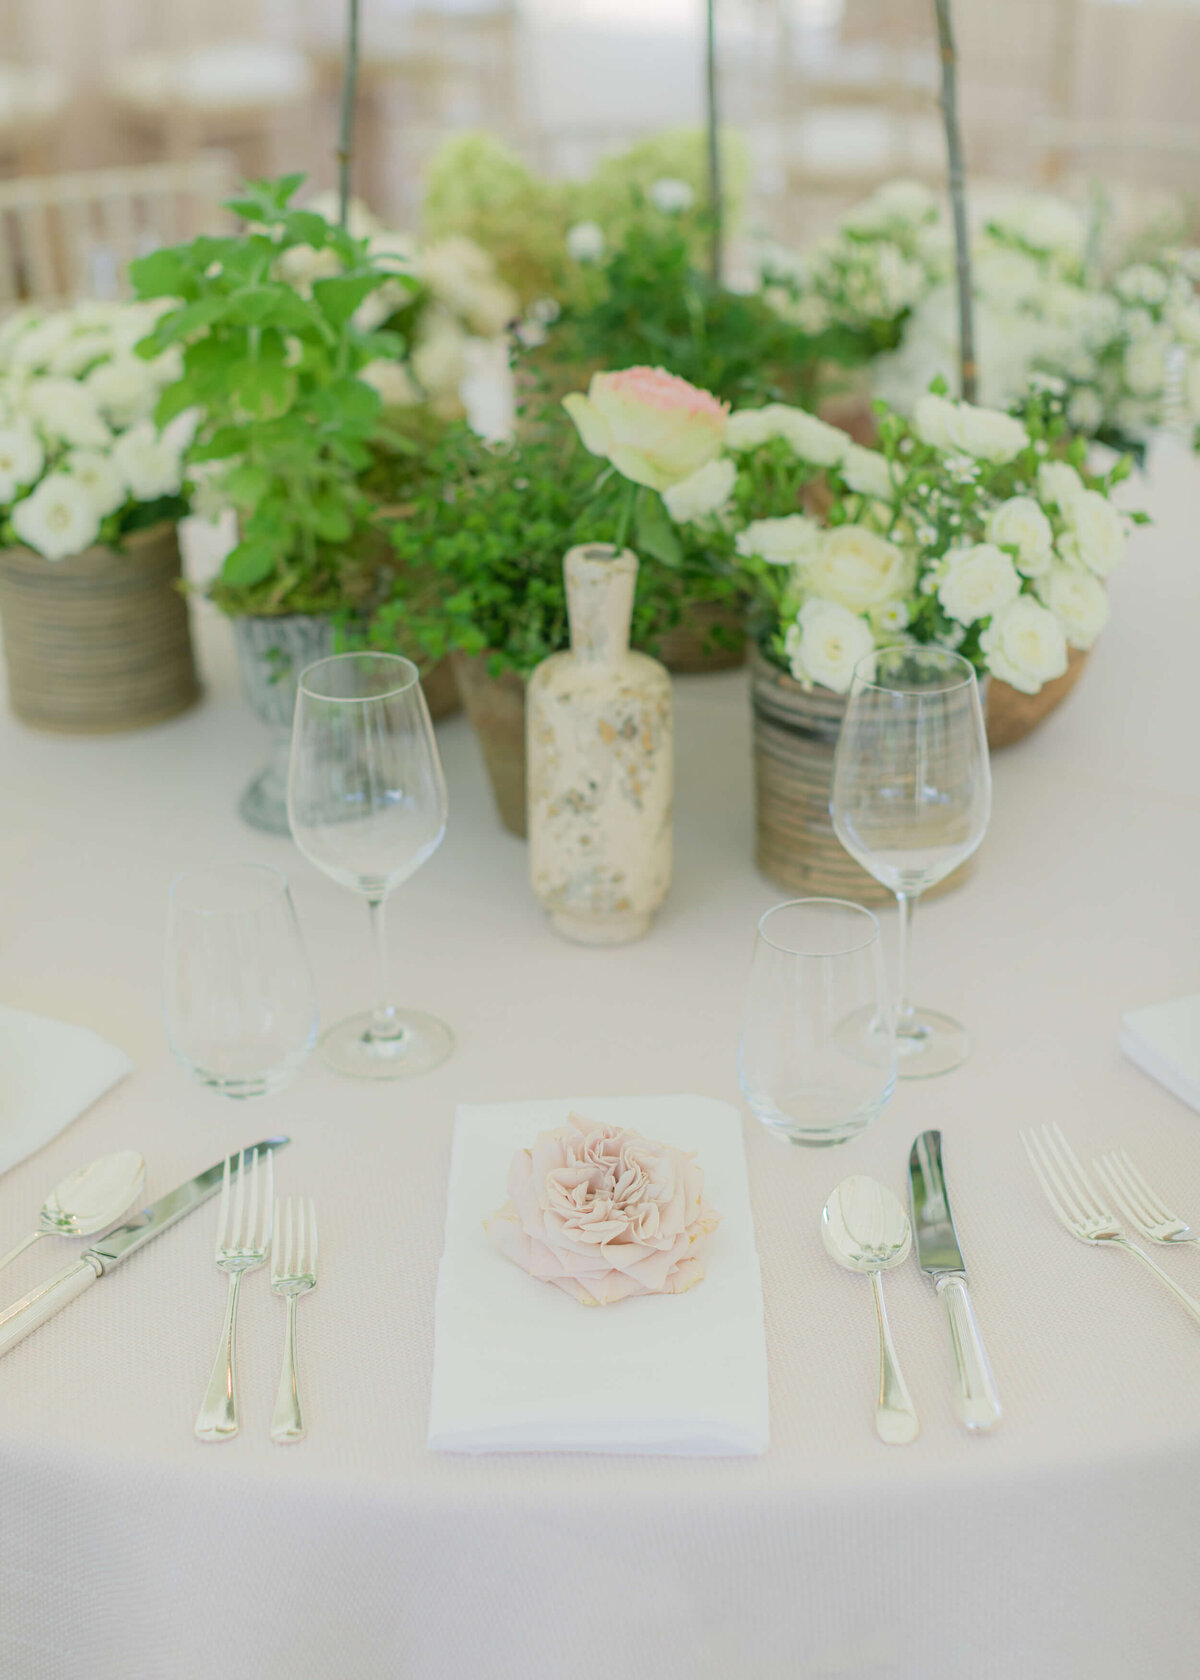 chloe-winstanley-weddings-tablesetting-john-carter-flowers